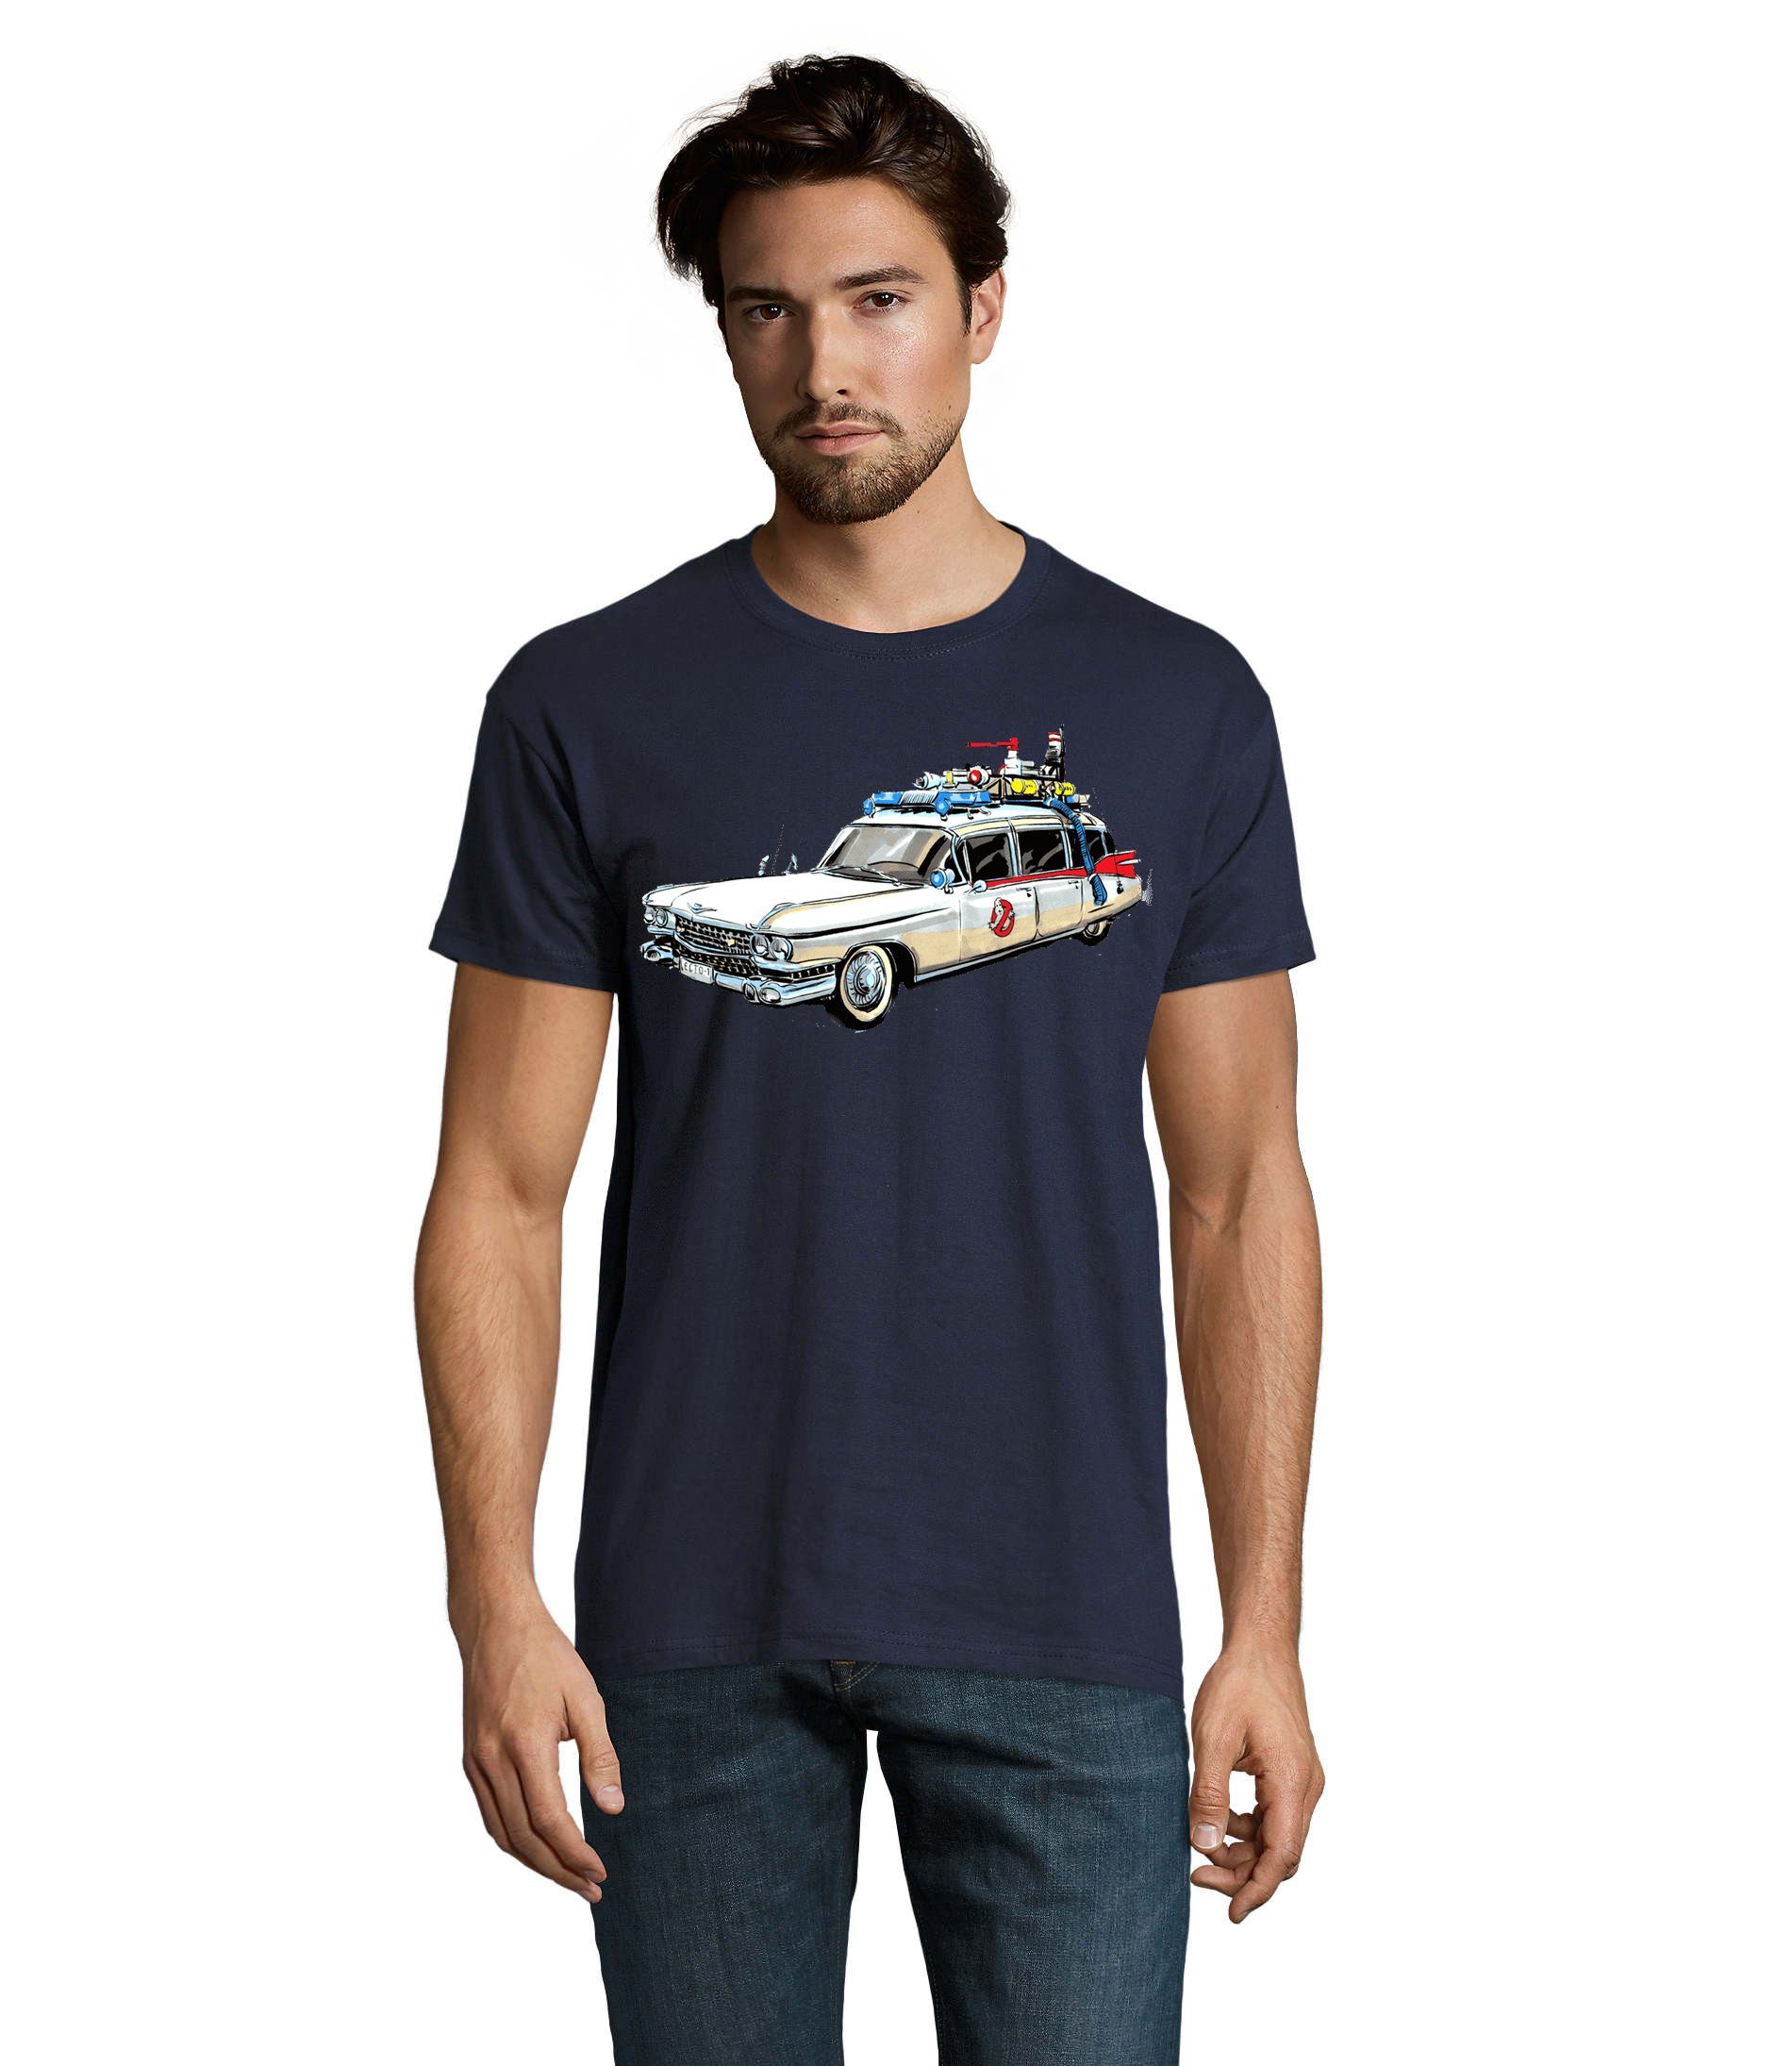 Blondie & Brownie T-Shirt Herren Ghostbusters Cars Auto Geisterjäger Geister Film Ghost Navyblau